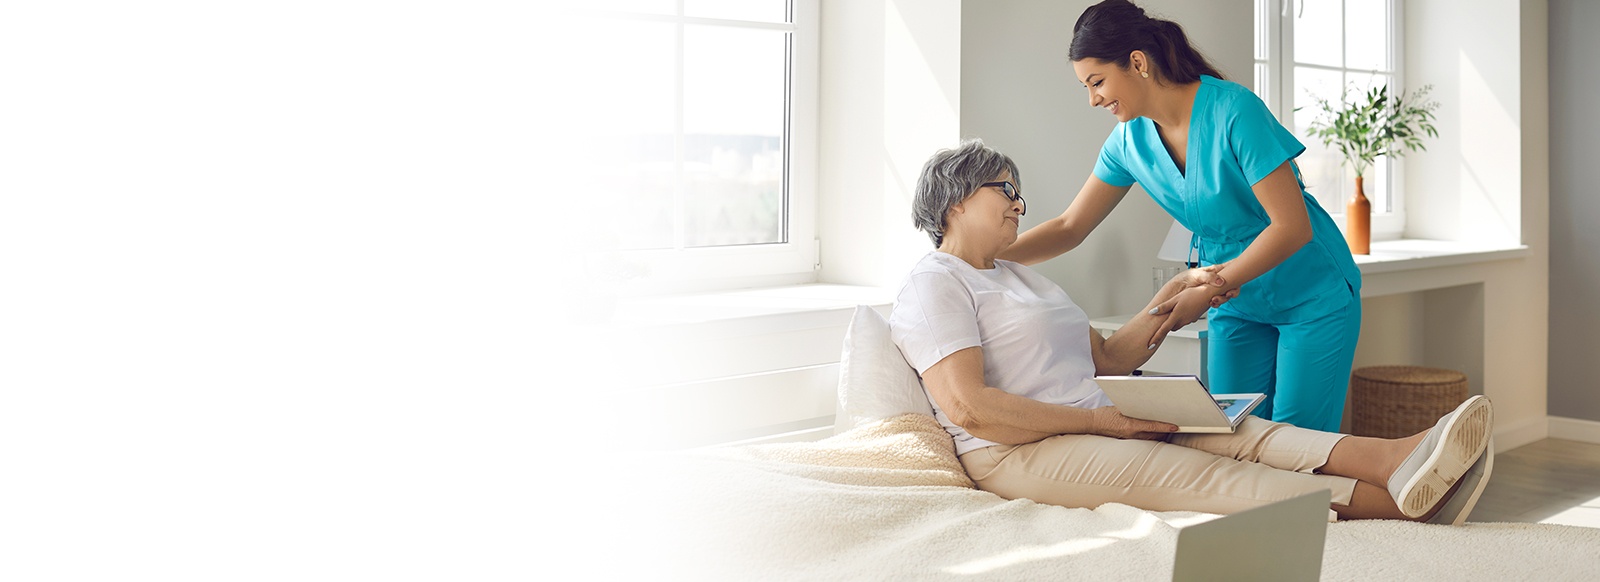 North Calgary Home Care Ltd offers Companion Care Services for Seniors across Calgary, AB